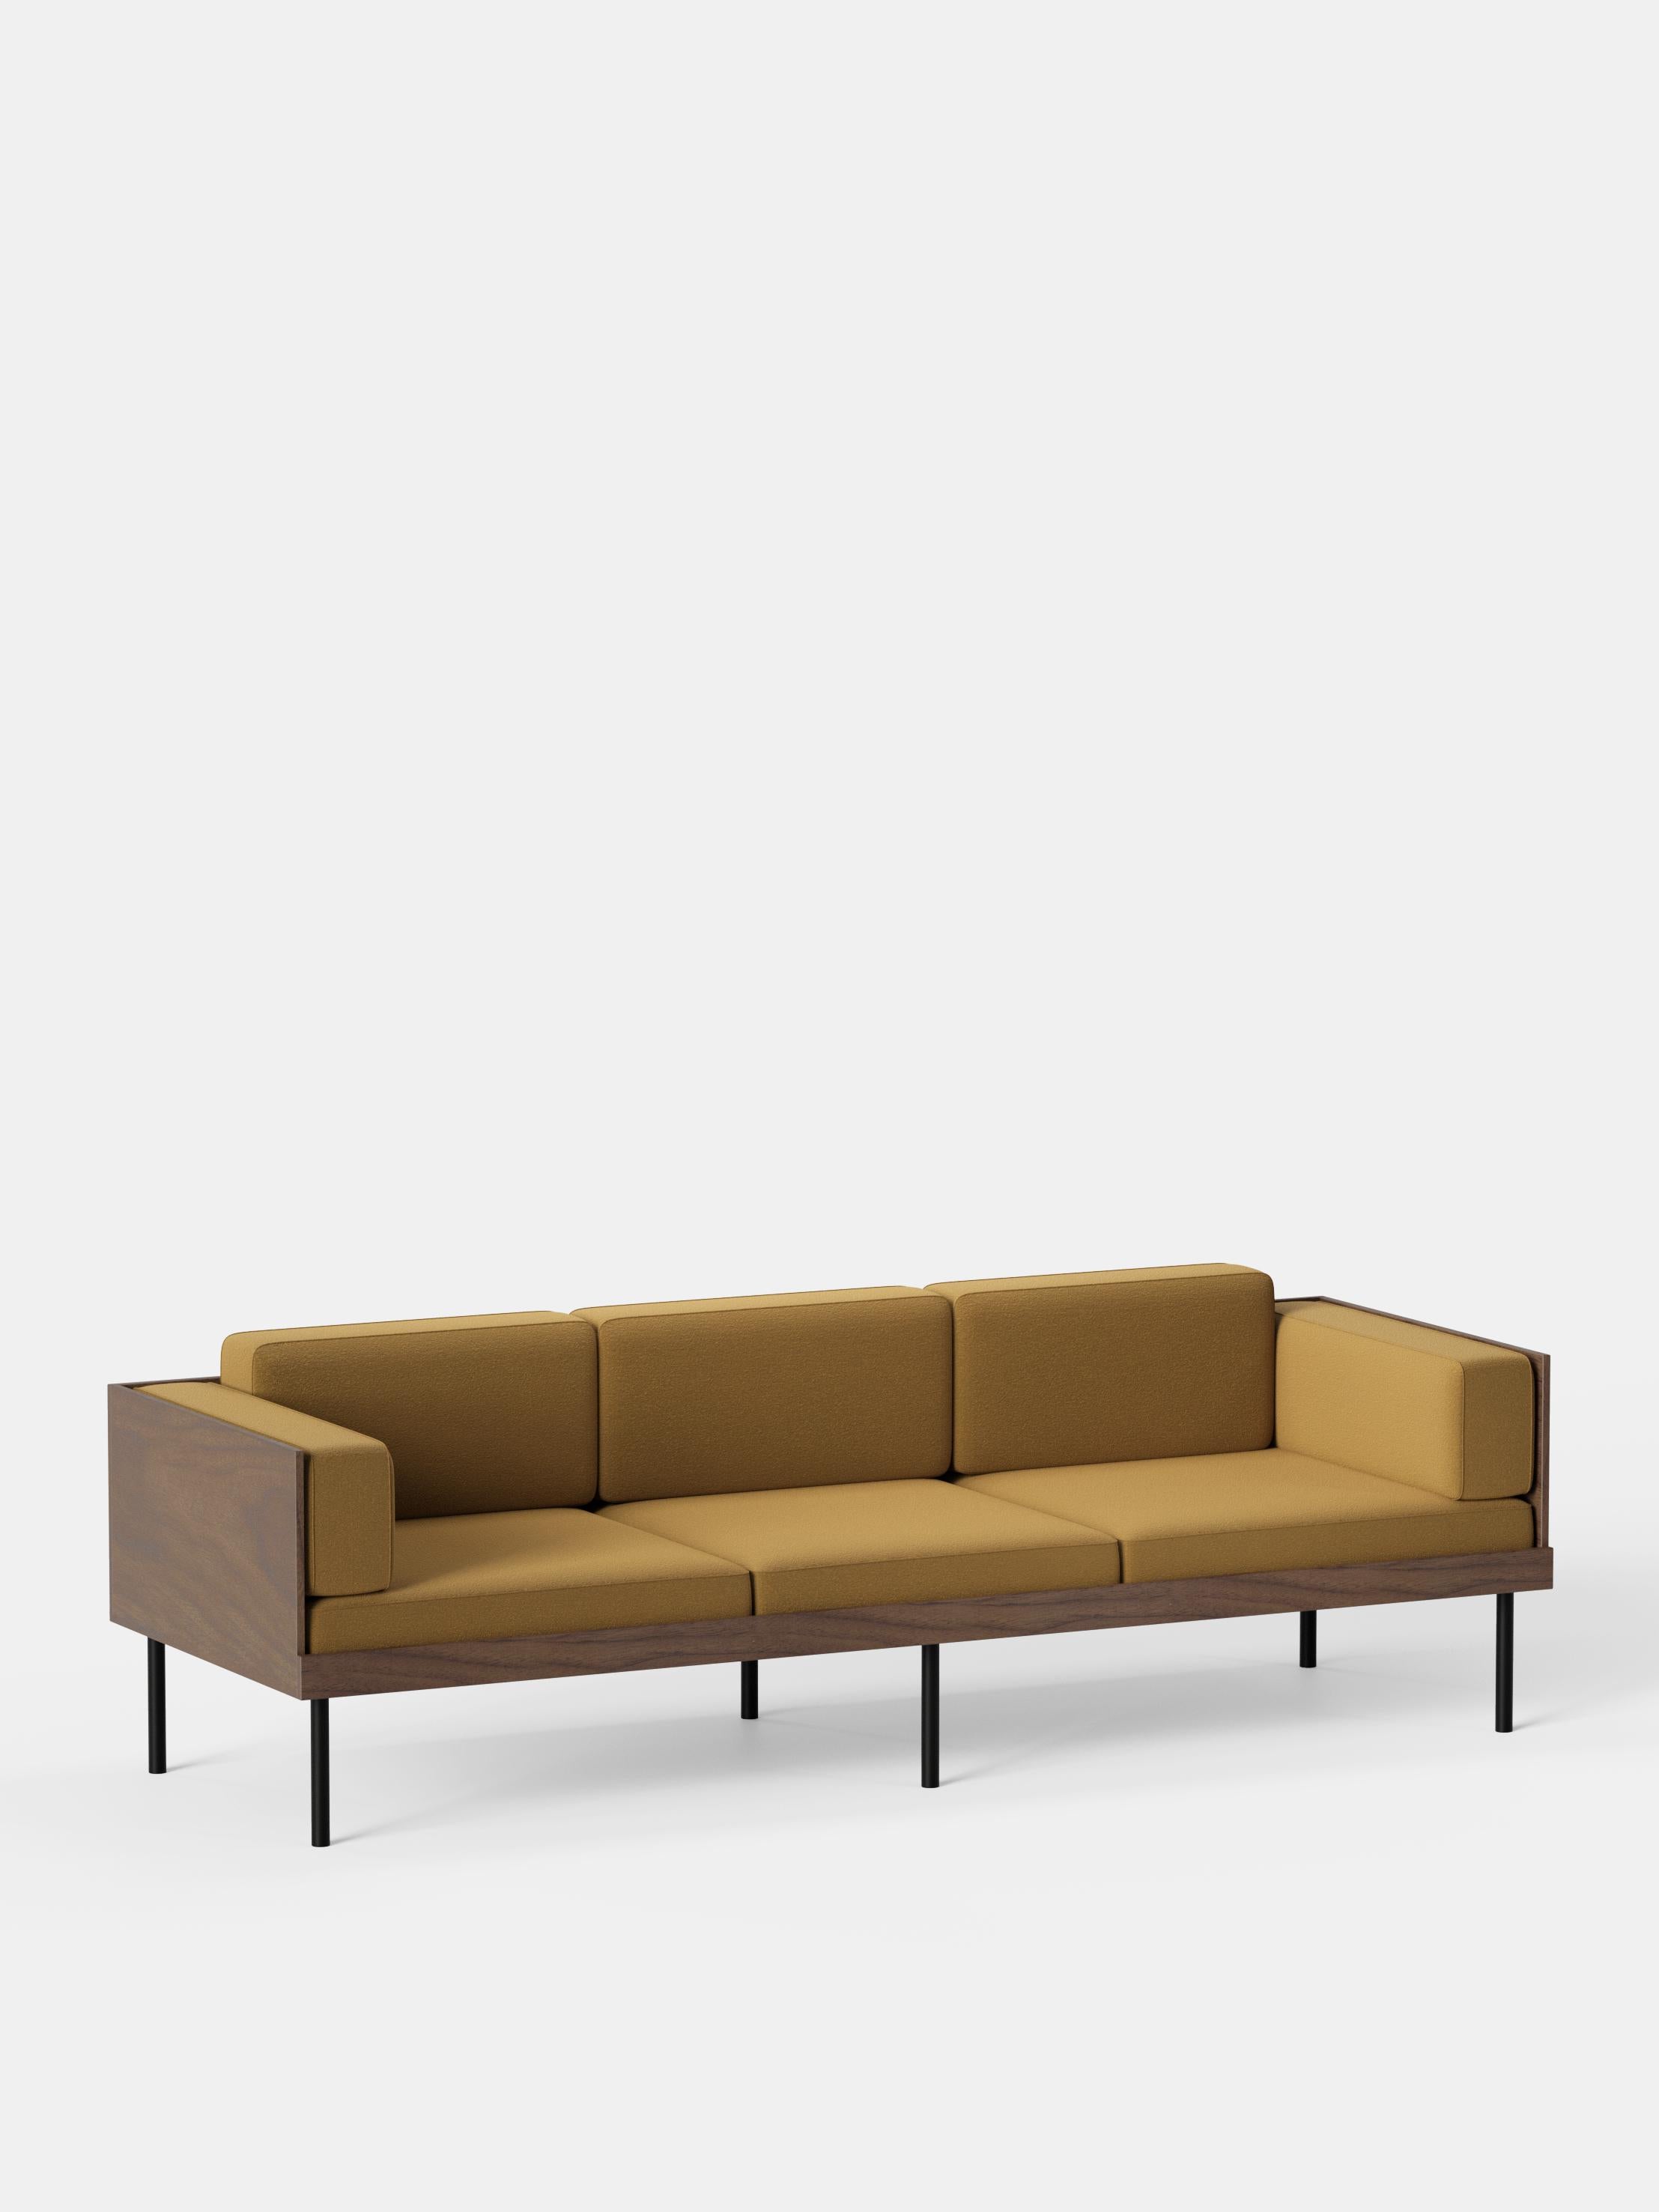 Ochre Cut Sofa by Kann Design
Dimensions: D 80 x W 230 x H 72 cm.
Materials: Solid wood, steel, wood veneer, HR foam, fabric upholstery Kvadrat Baru 450 (90% wool, 10% nylon).
Available in other fabrics.

The Cut sofa has a deep, comfortable seat